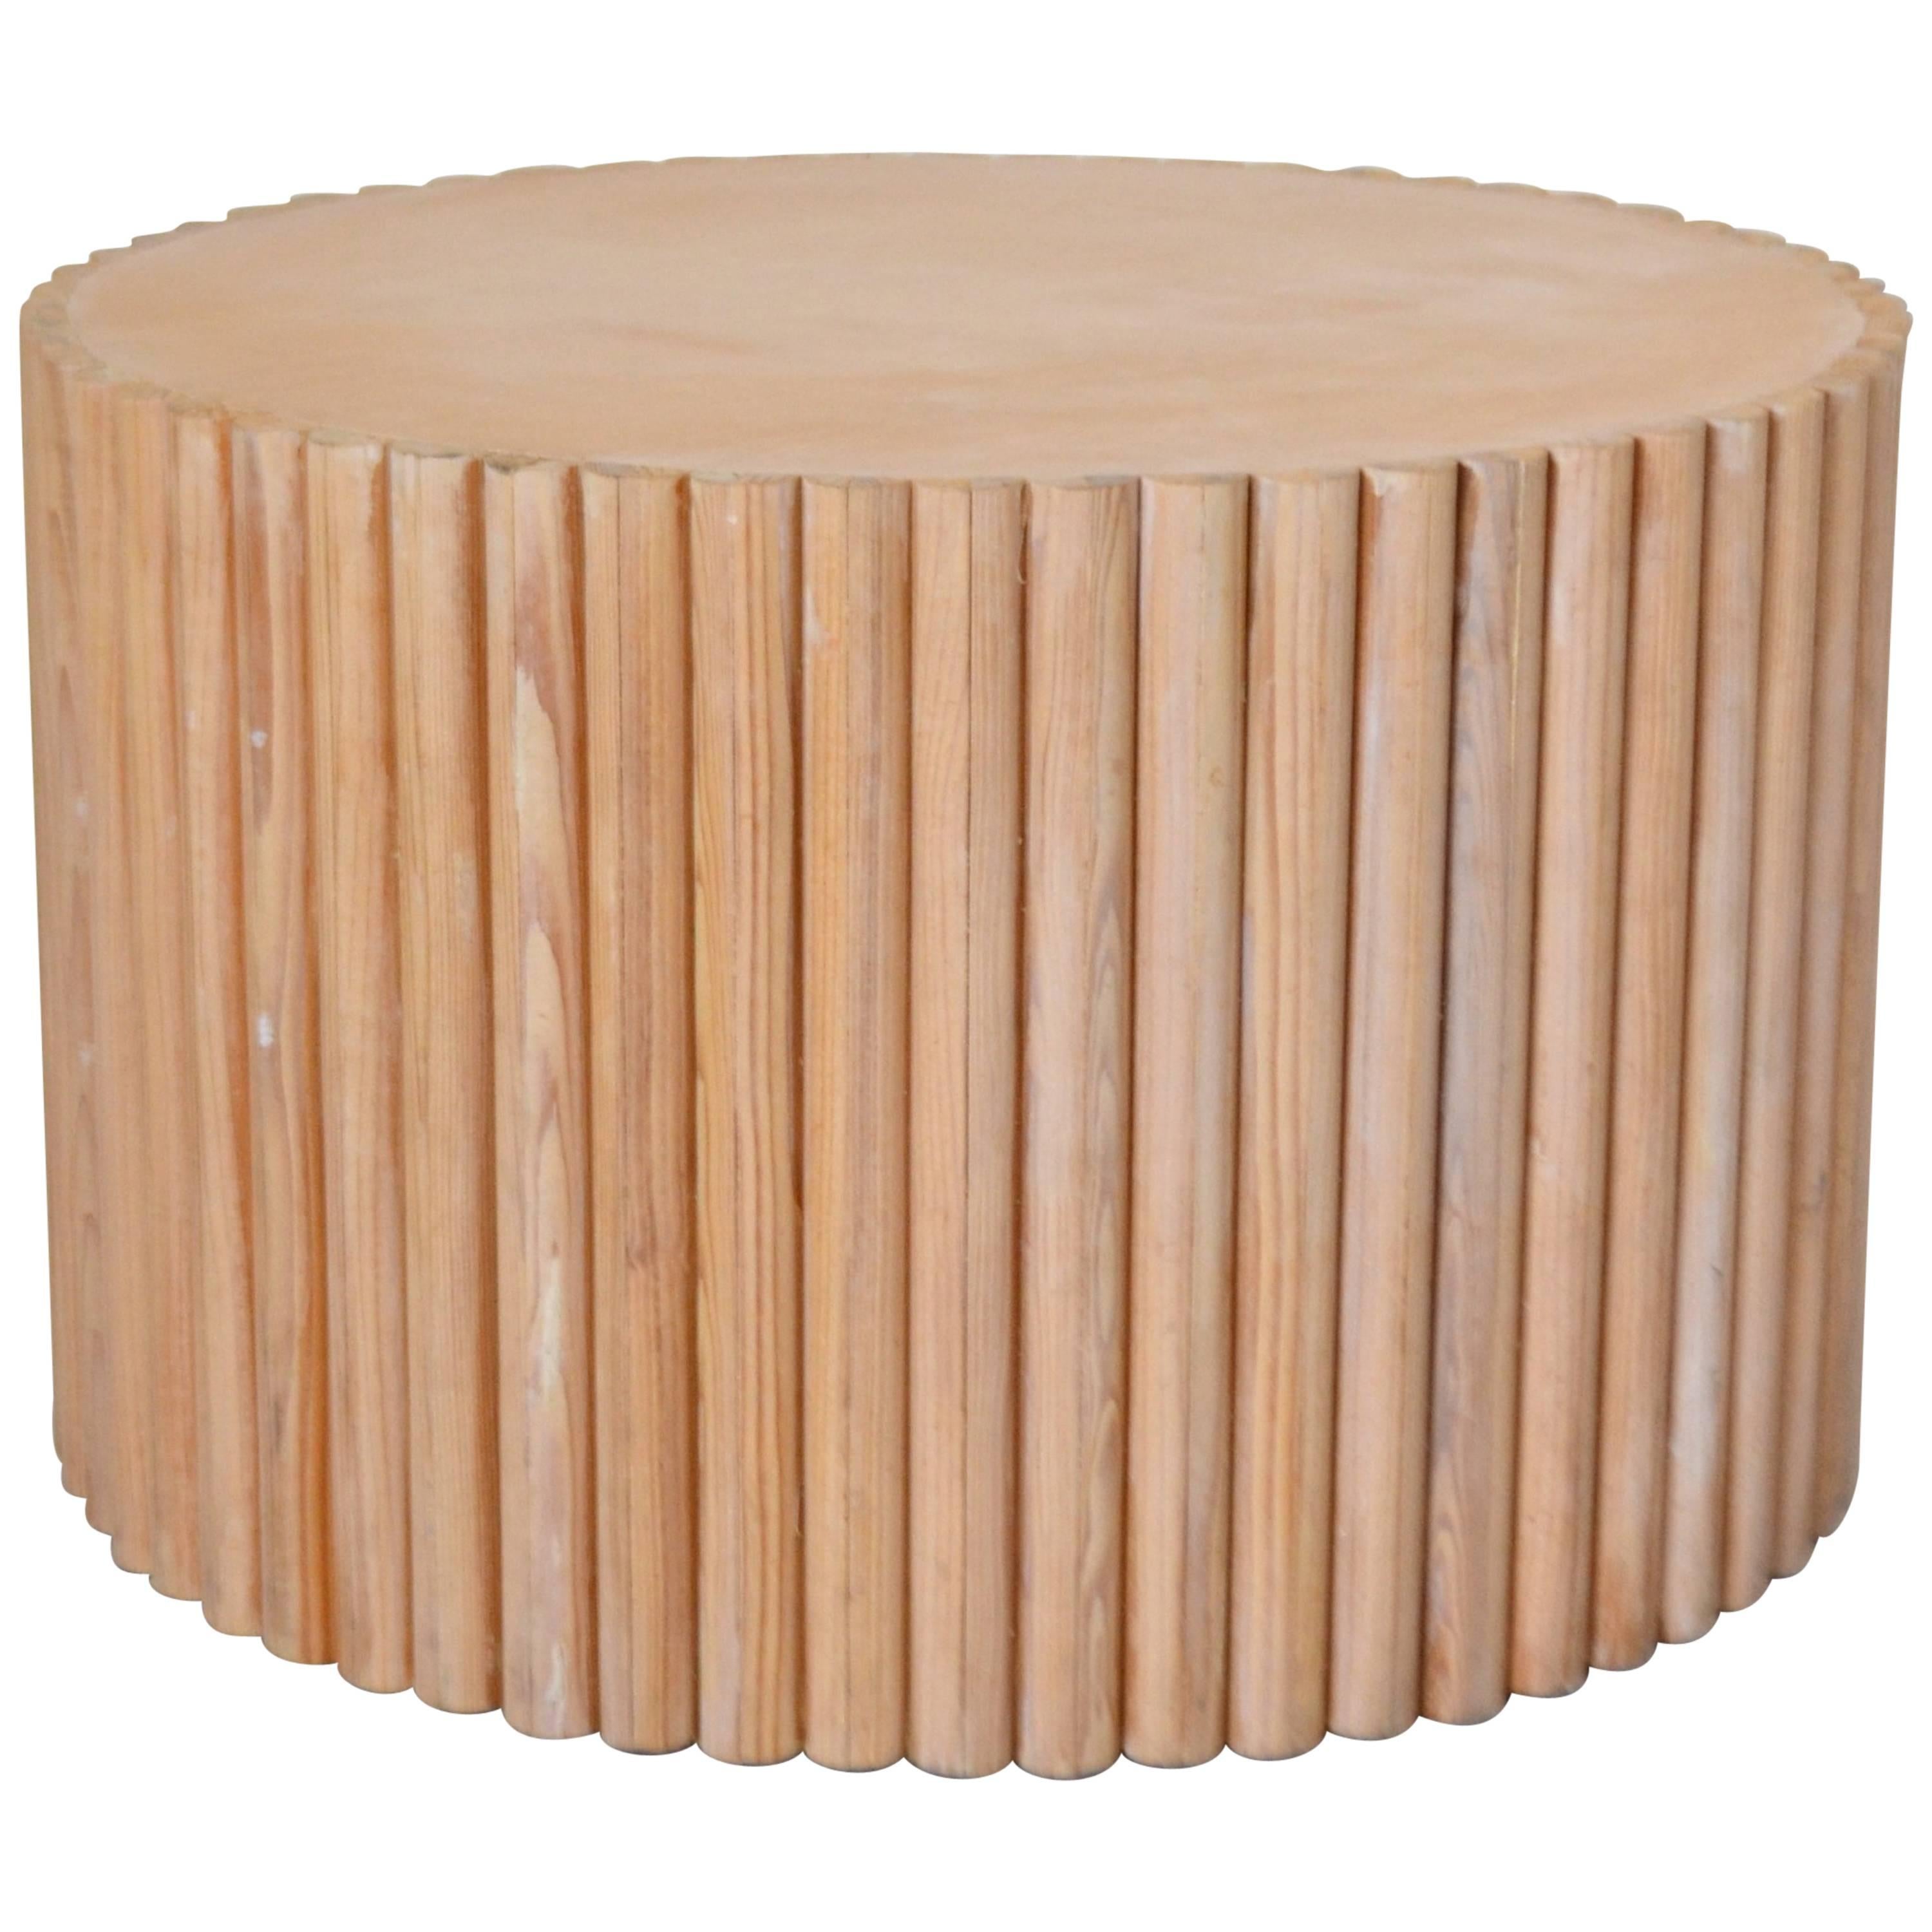 Postmodern Wooden Drum Form Side Table